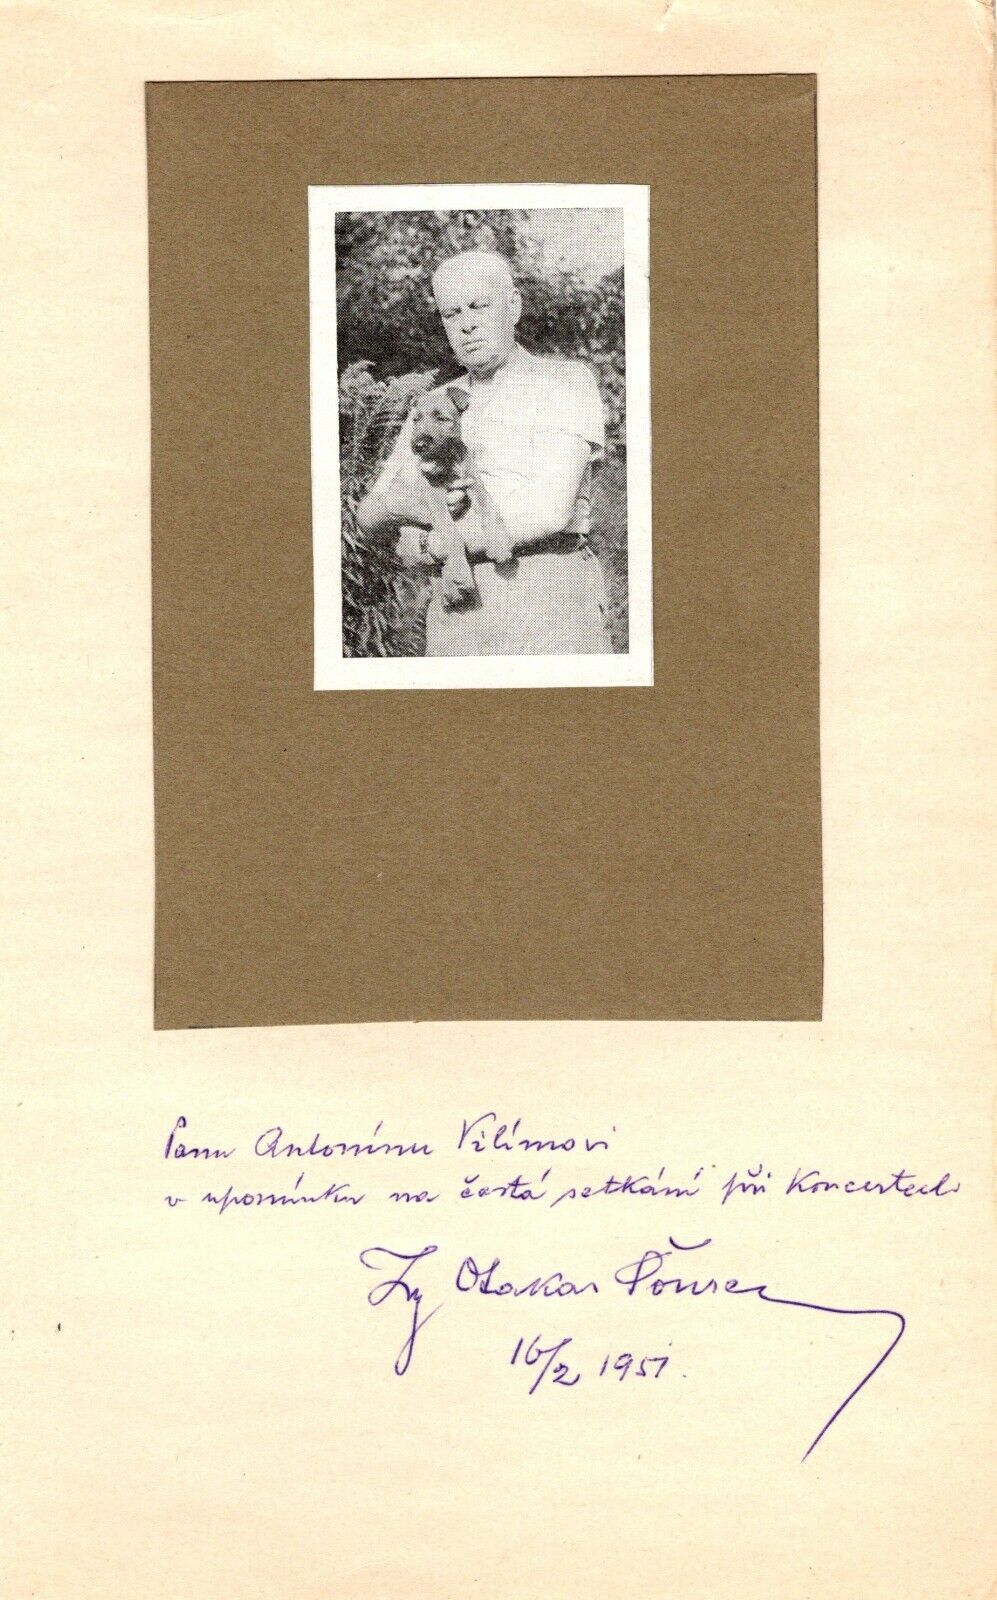 OTAKAR SOUREK Important Dvorak biographer, choir director and pianist, 1951